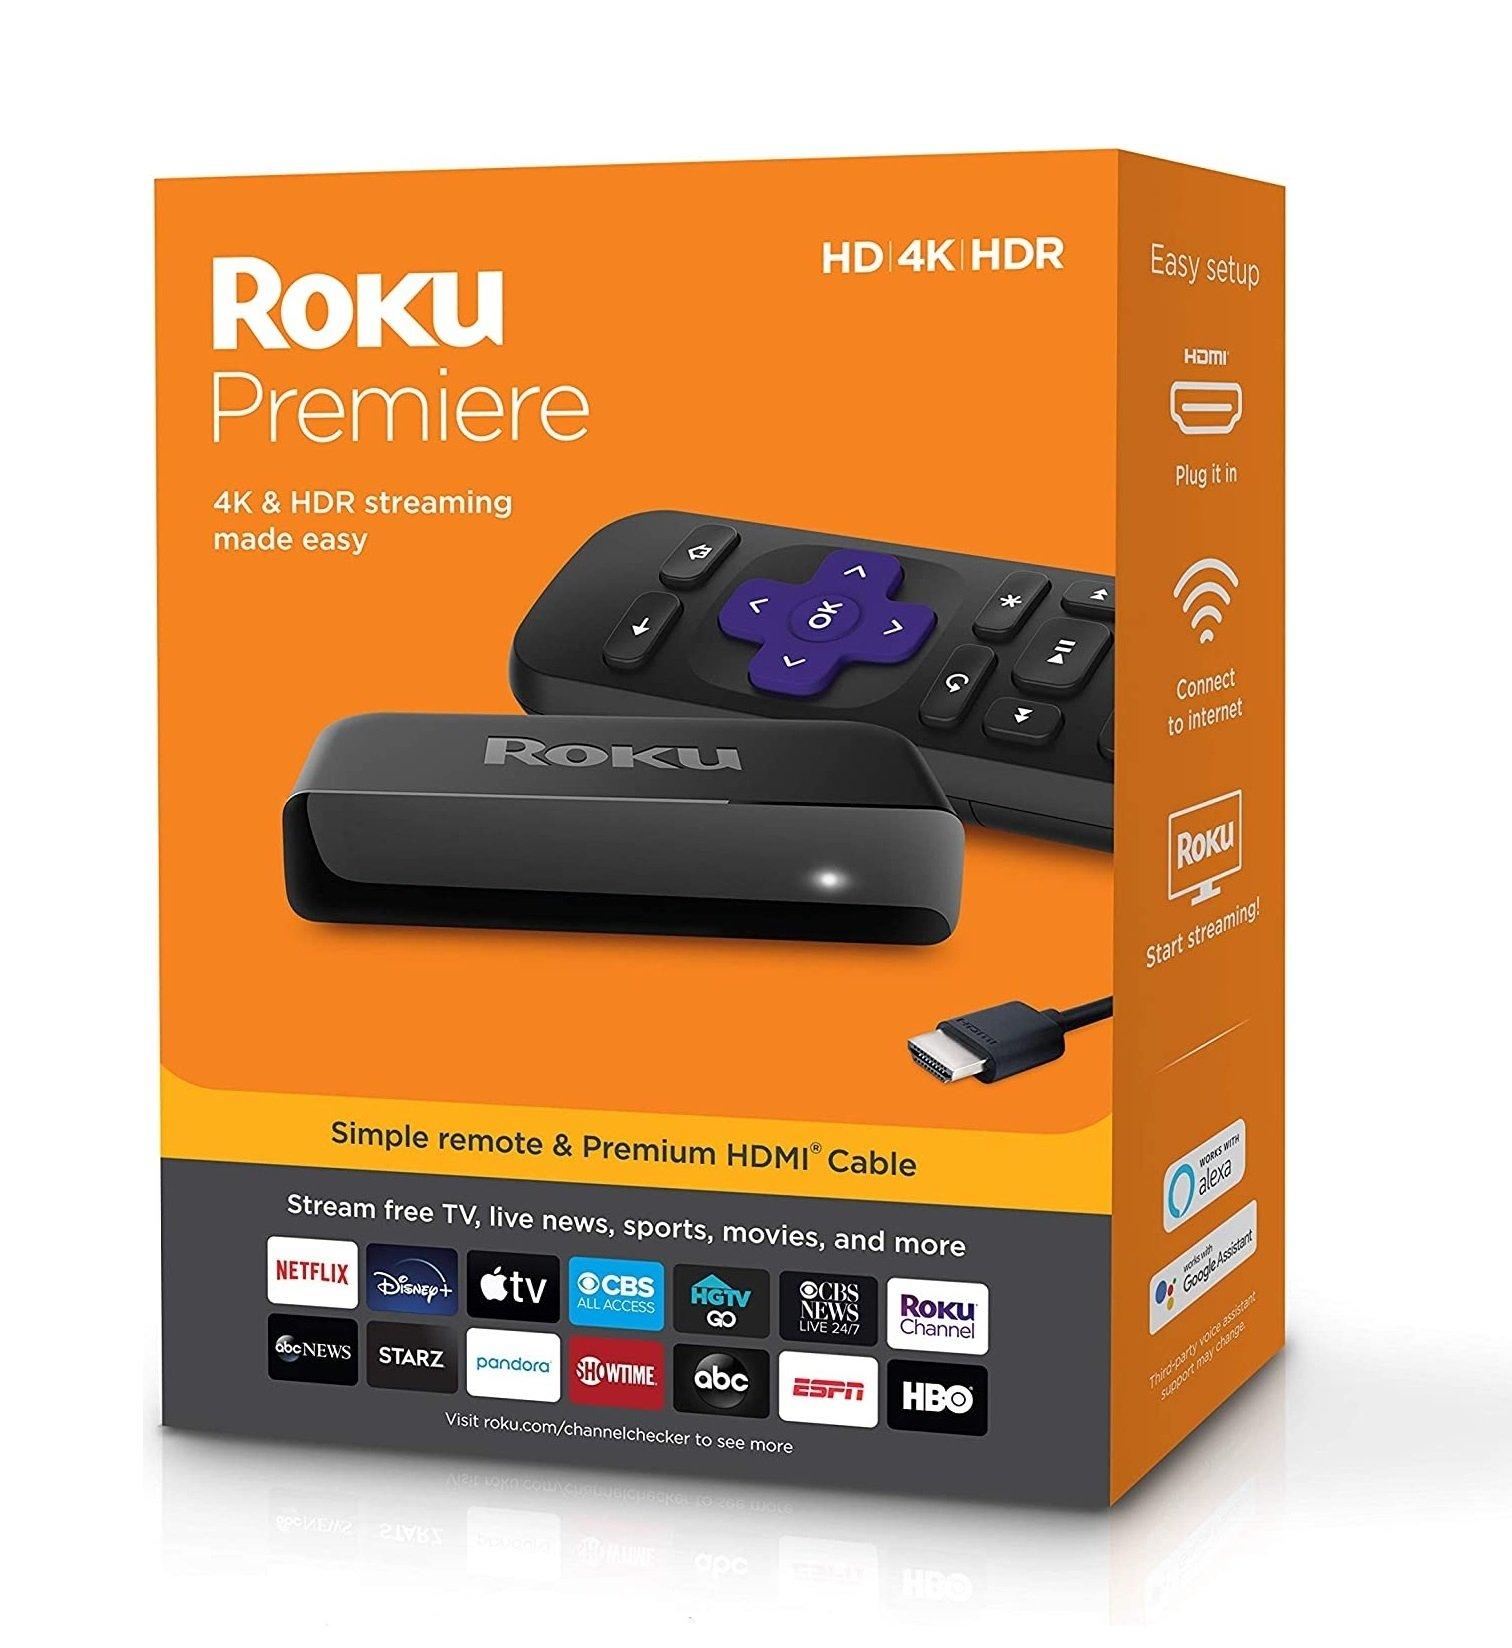 Buy Roku premiere 3920r 4k hdr streaming device in Kuwait